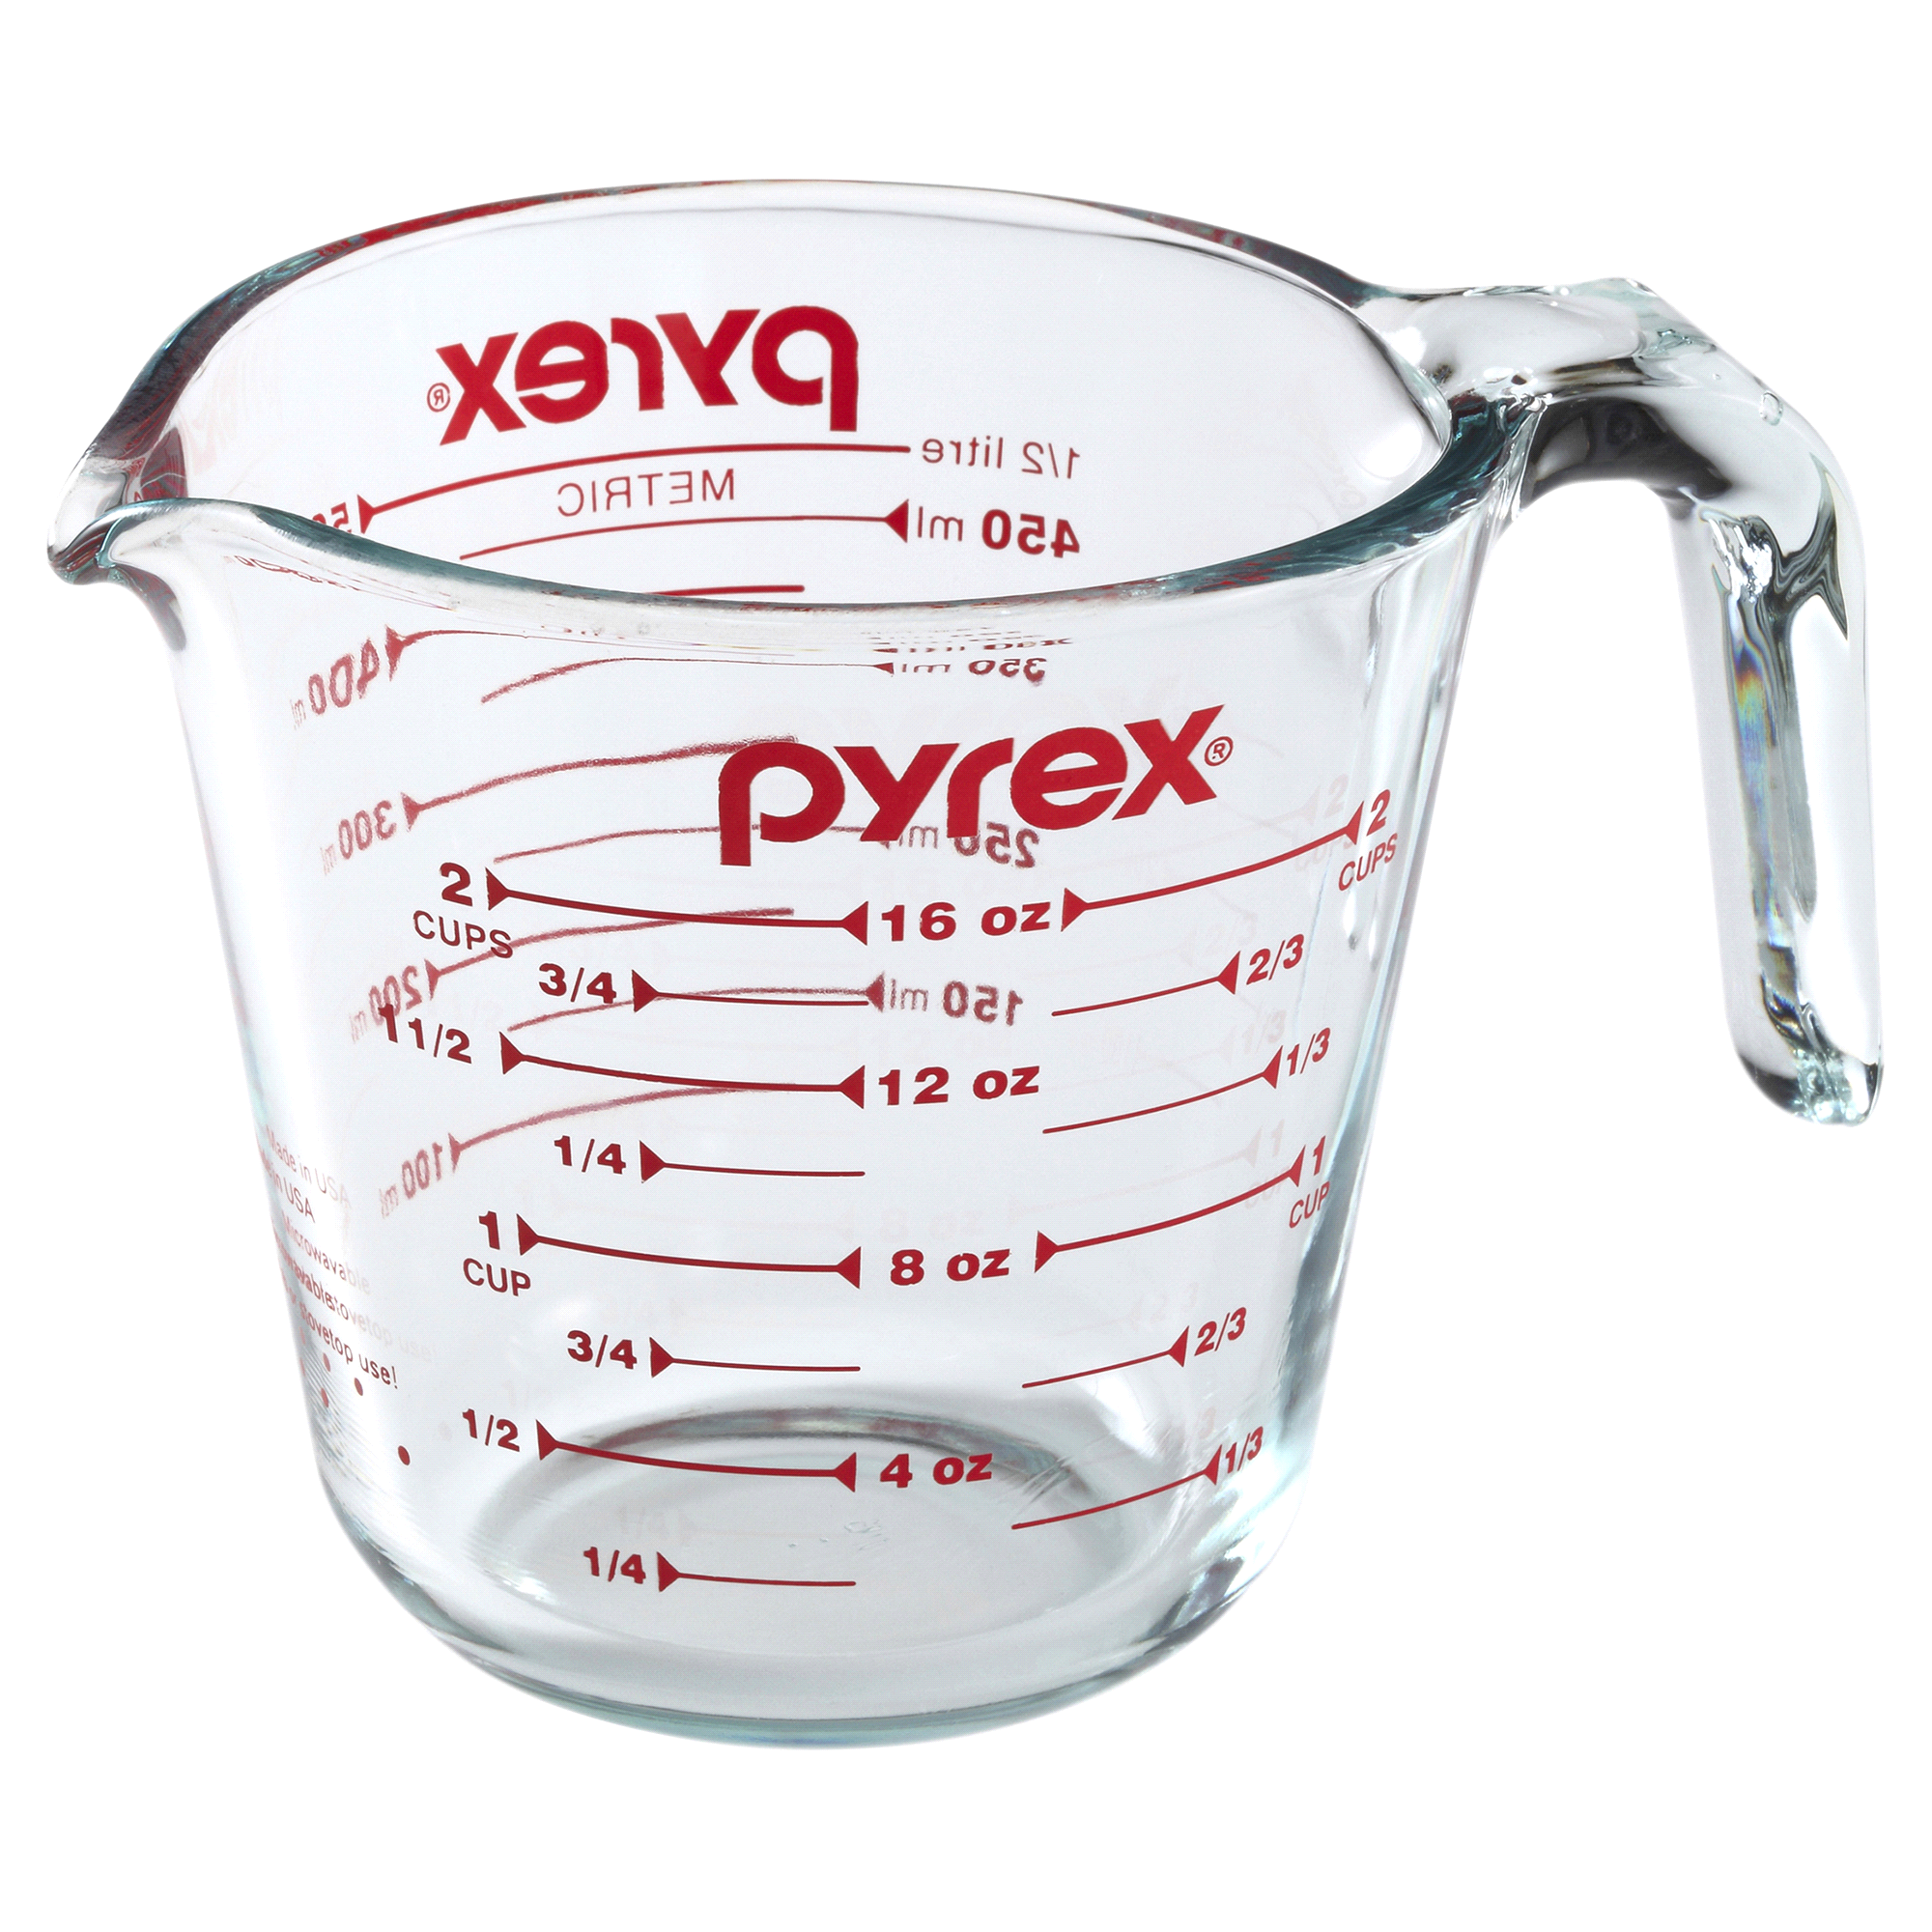 Pyrex 3-Piece Glass Measuring